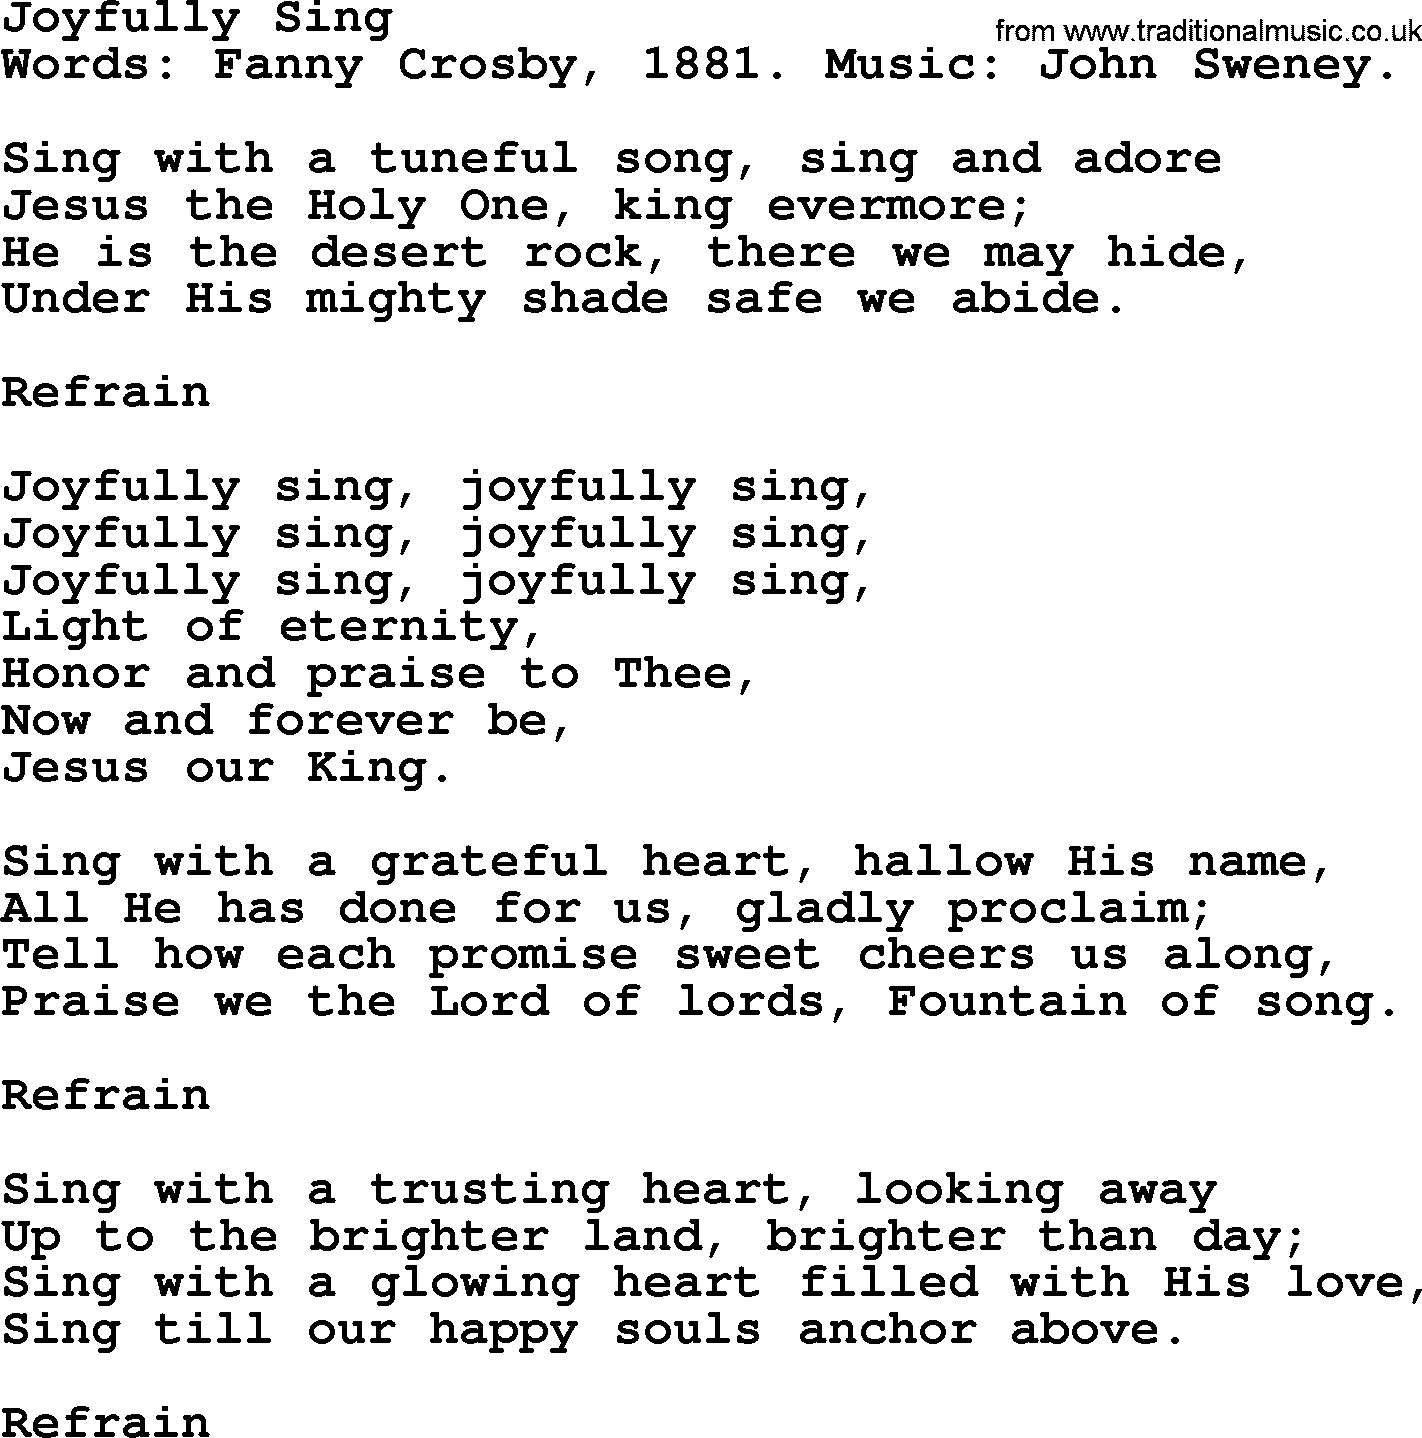 Fanny Crosby song: Joyfully Sing, lyrics